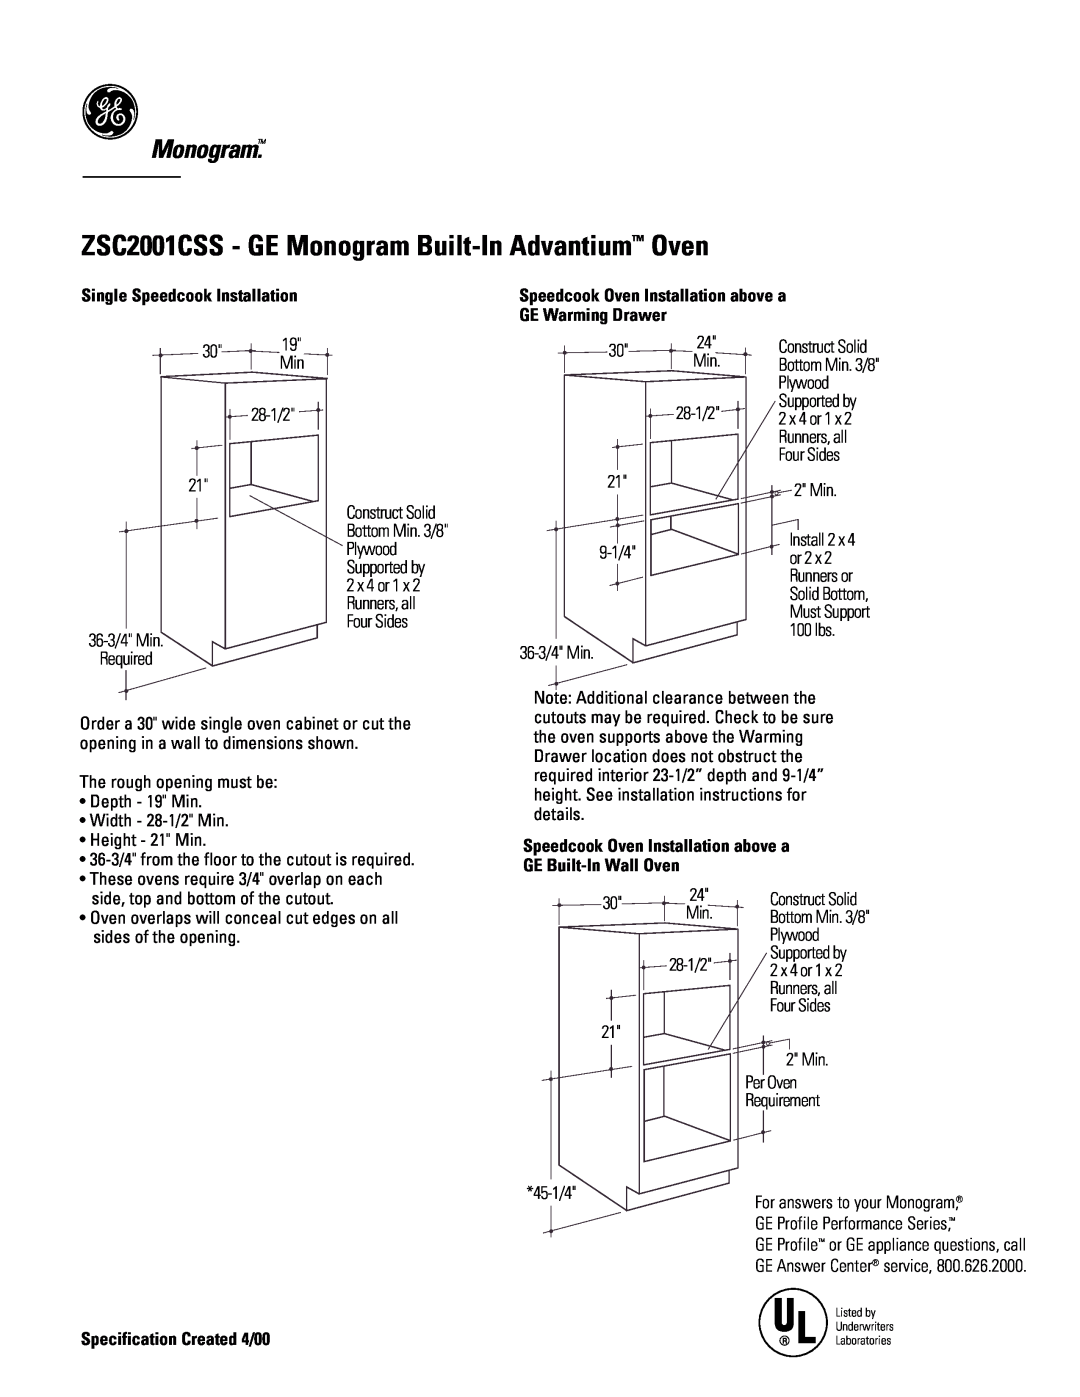 GE Monogram ZSC2001CSS - GE Monogram Built-In Advantium Oven, 30 19 Min 28-1/2, Construct Solid, 36-3/4 Min Required 